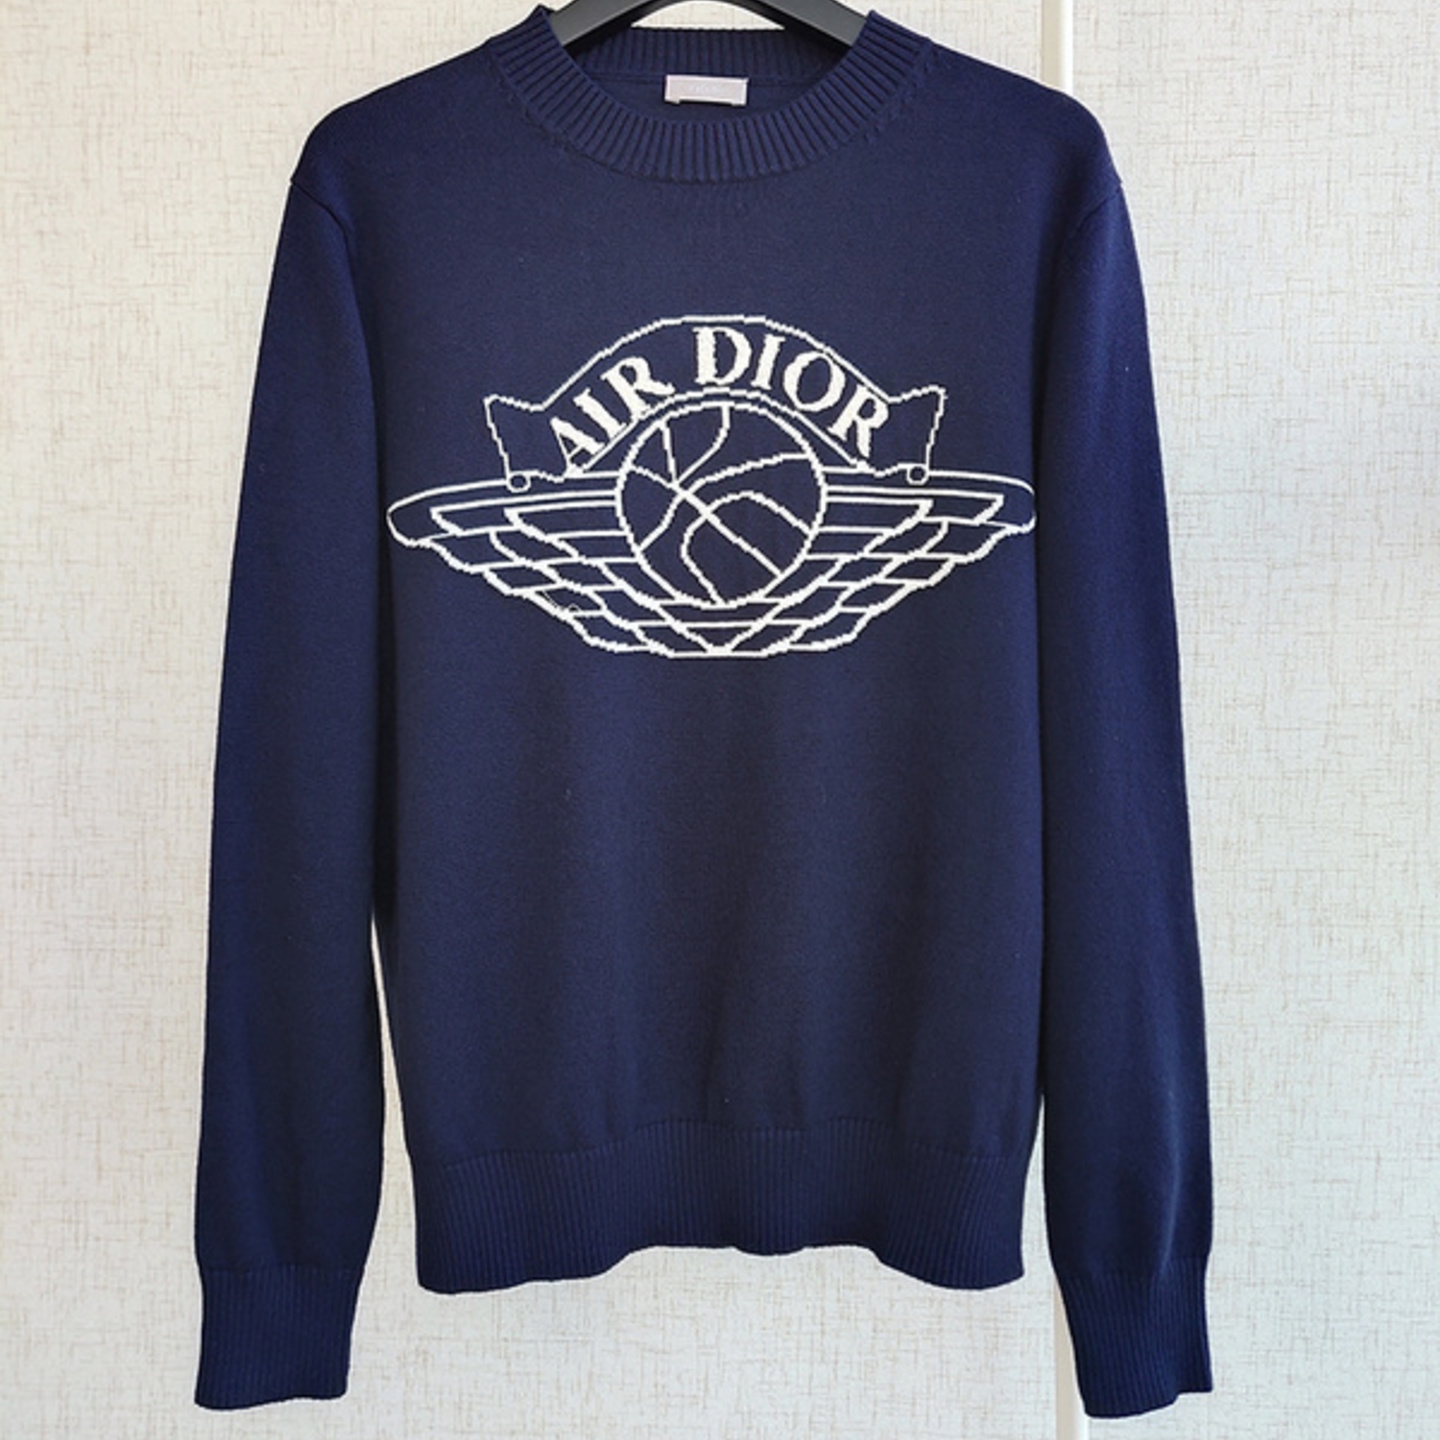 Jordan x Dior FW20 Sweatshirt - Air Dior